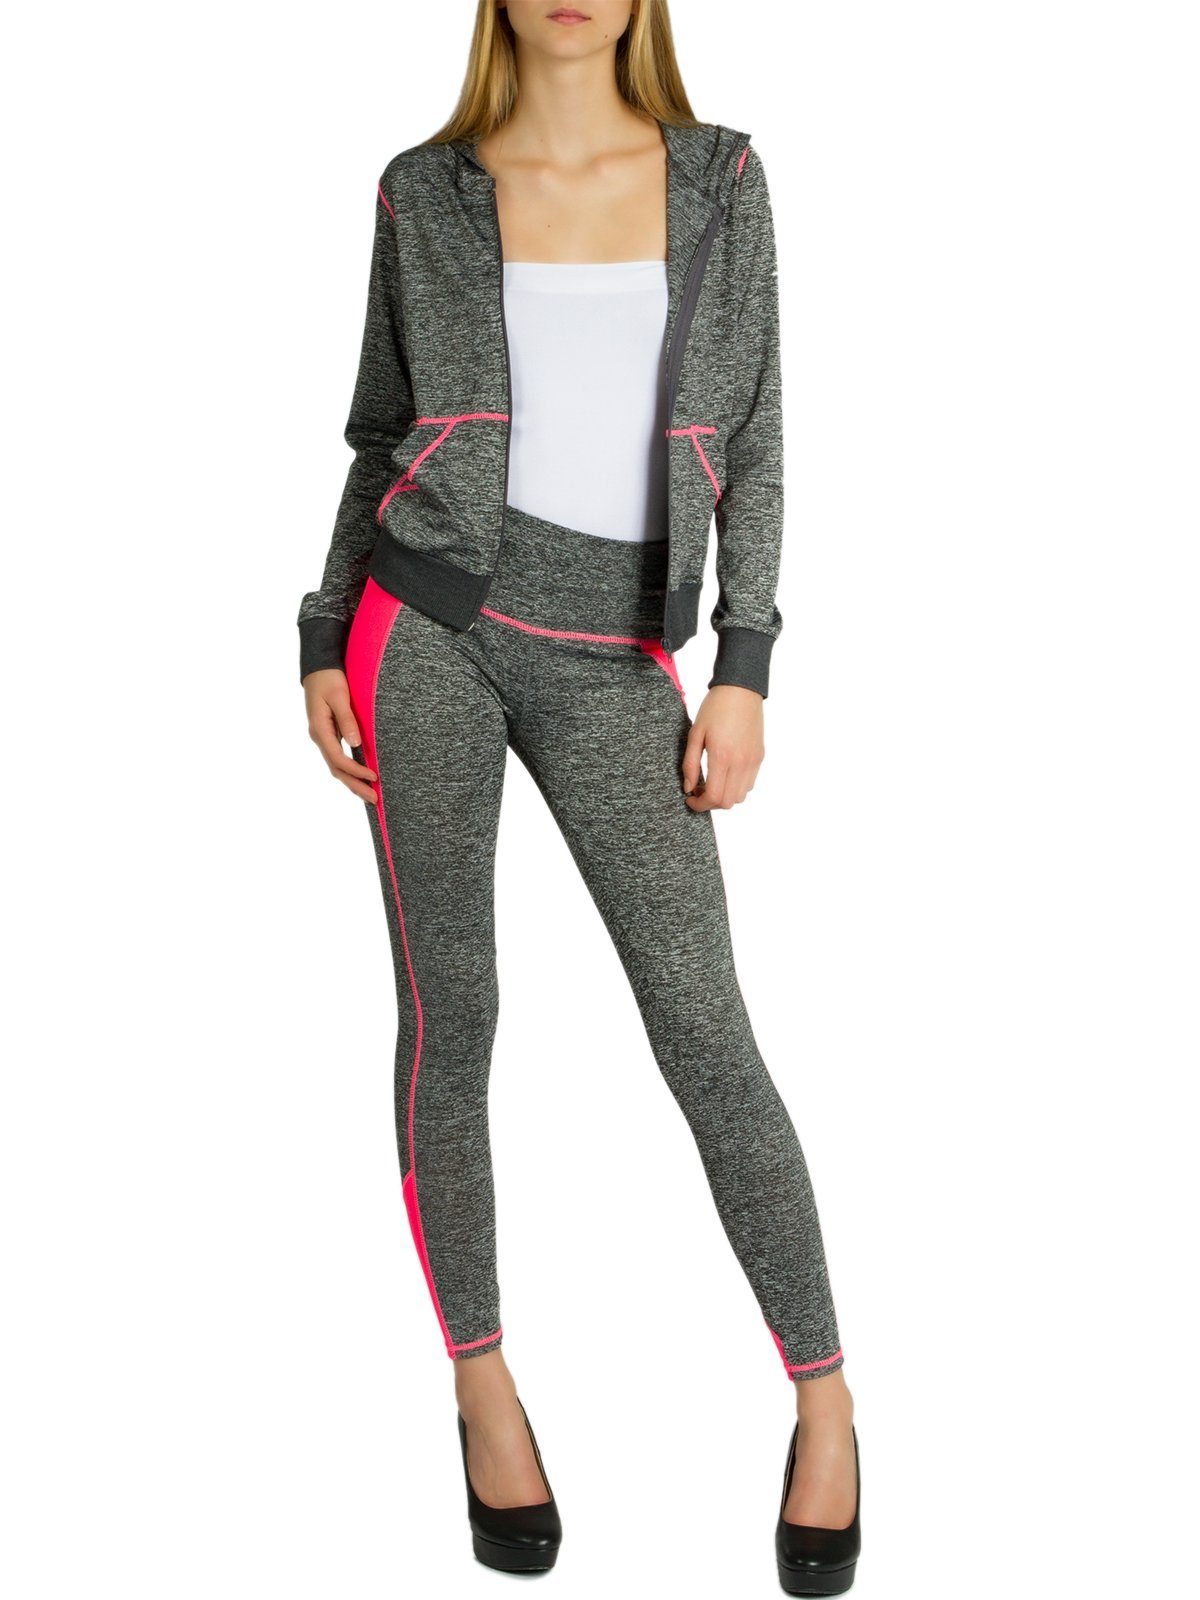 Caspar Trainingsanzug JG001 stylischer Damen Jogginganzug mit Kapuze grau meliert / neon pink